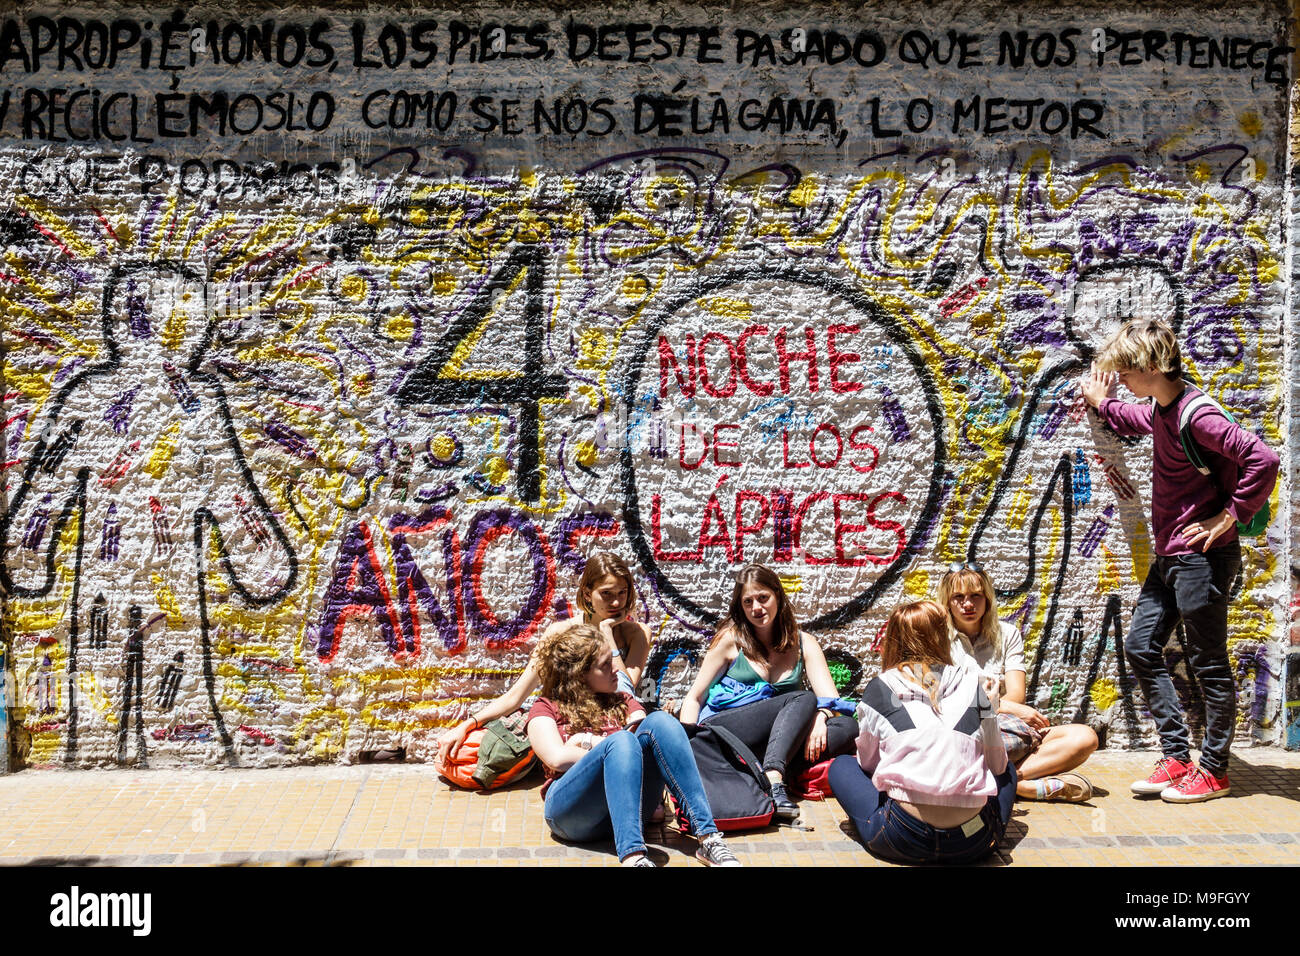 Buenos Aires Argentina,Bolivar Street,ragazze ragazze,bambini bambini bambini bambini bambini ragazzi,ragazzi adolescenti adolescenti scuola superiore,studenti p Foto Stock